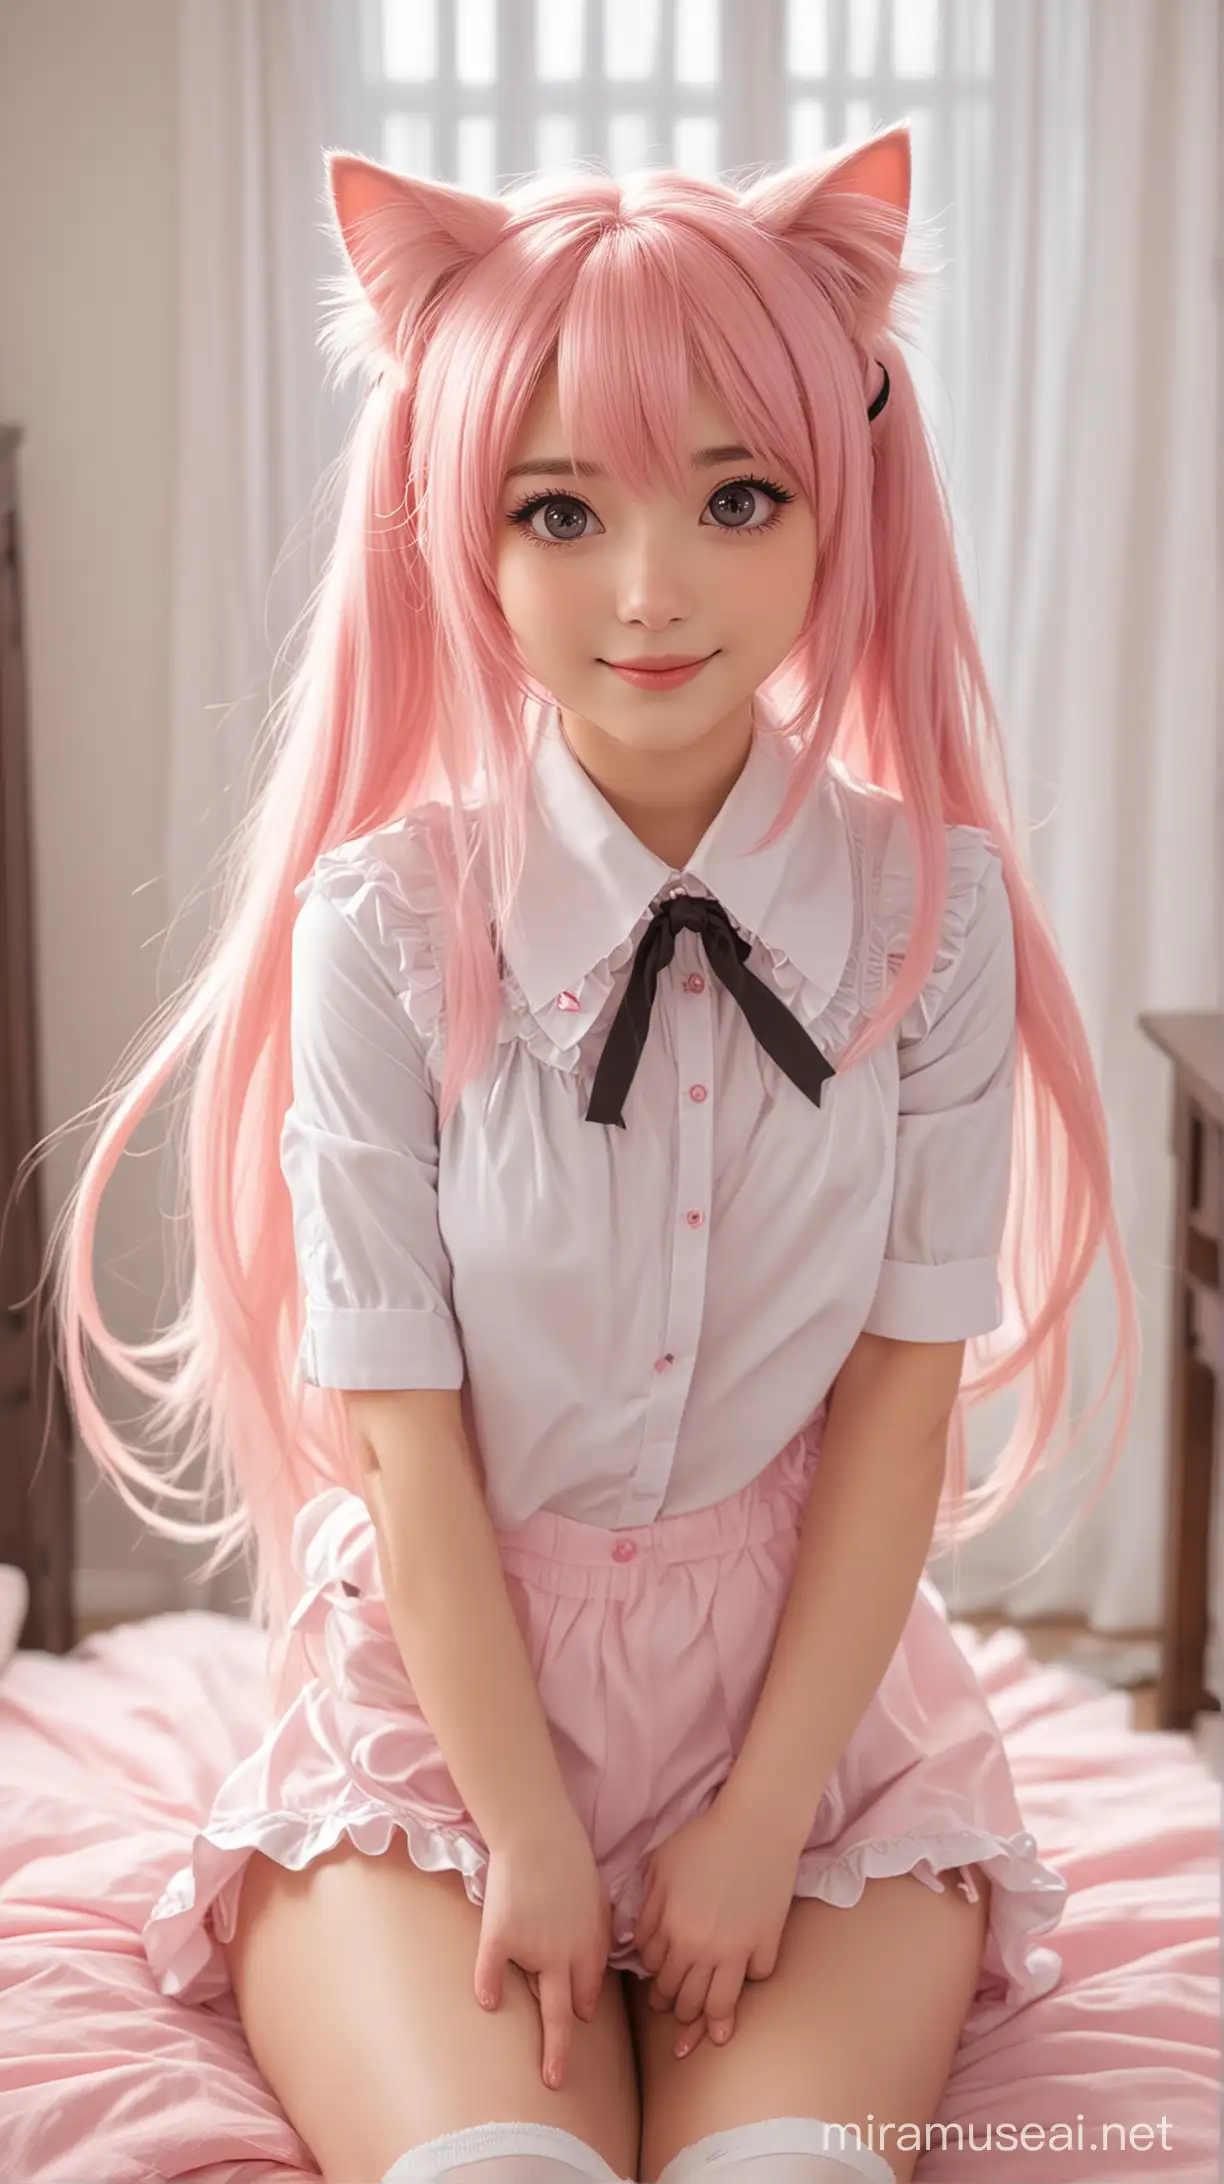 Kawaii Cat Girl in Pink Maid Uniform Getting Headpat HighQuality Anime Illustration